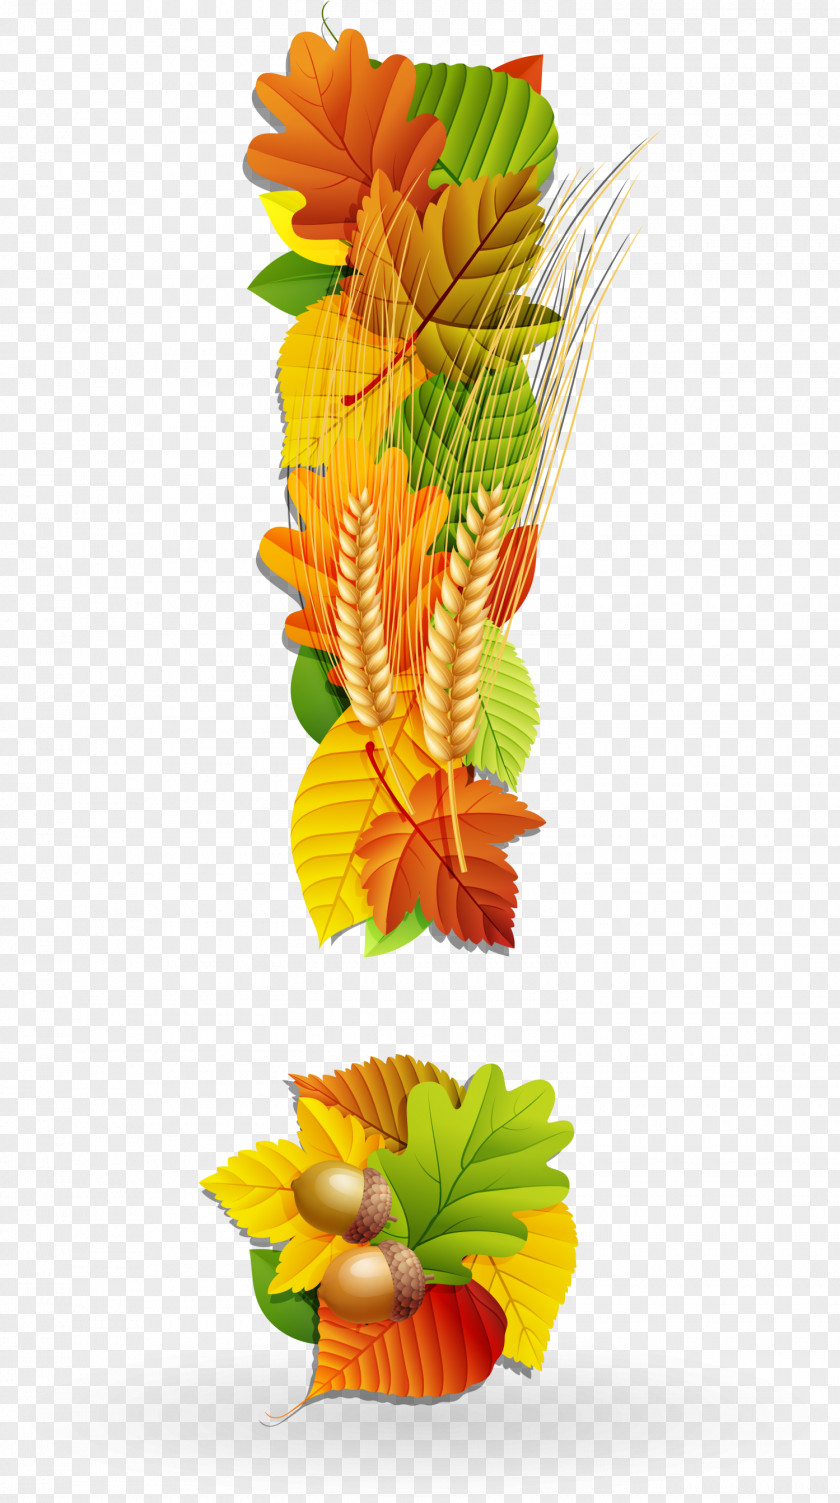 Autumn Leaves Exclamation Mark Floral Design Maple Leaf PNG